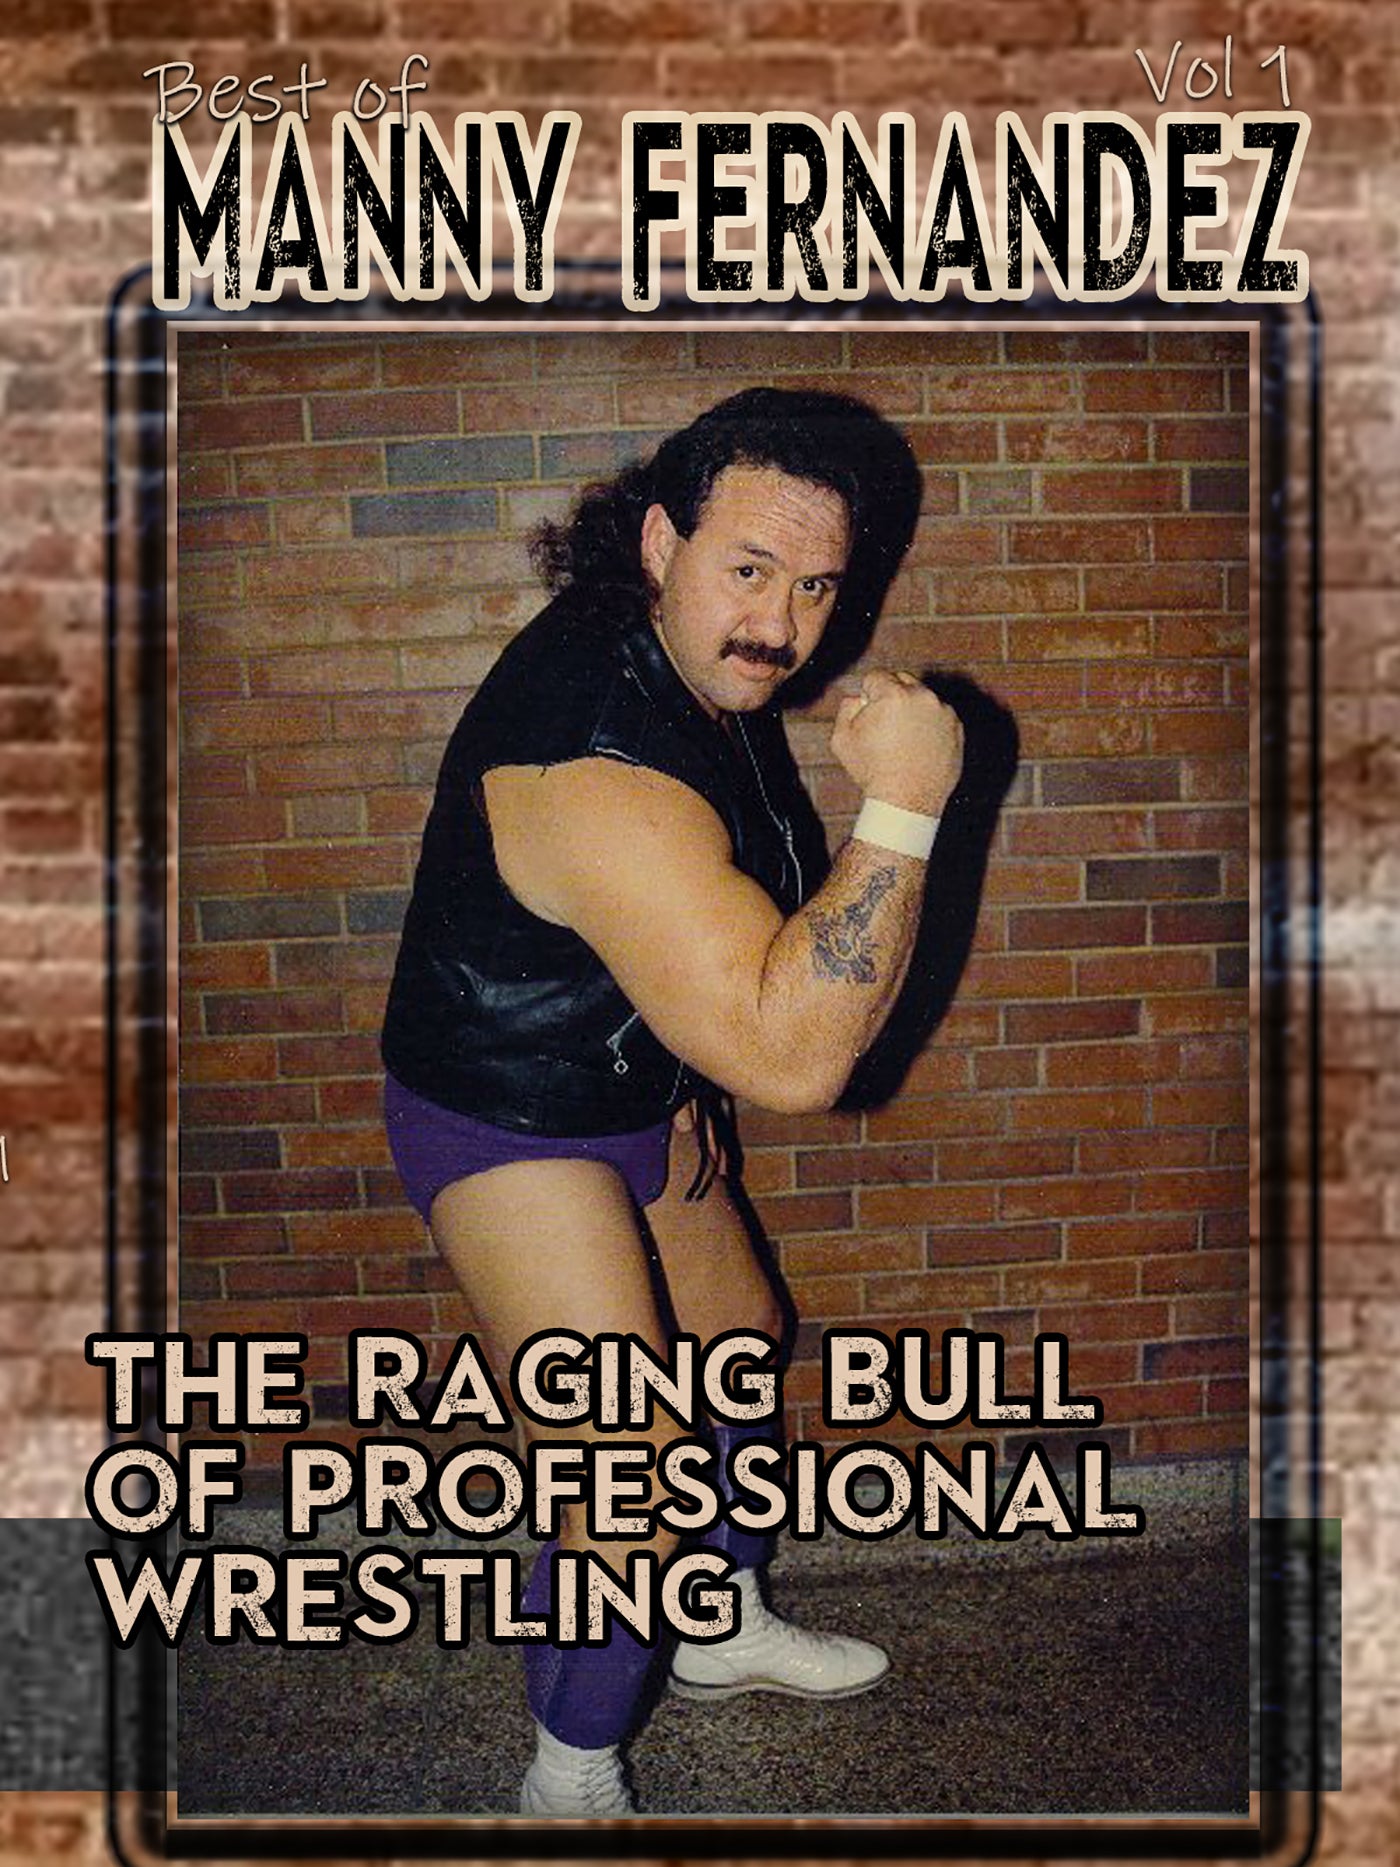 Manny Fernandez - Best Of Manny Fernandez Vol 1 cover art